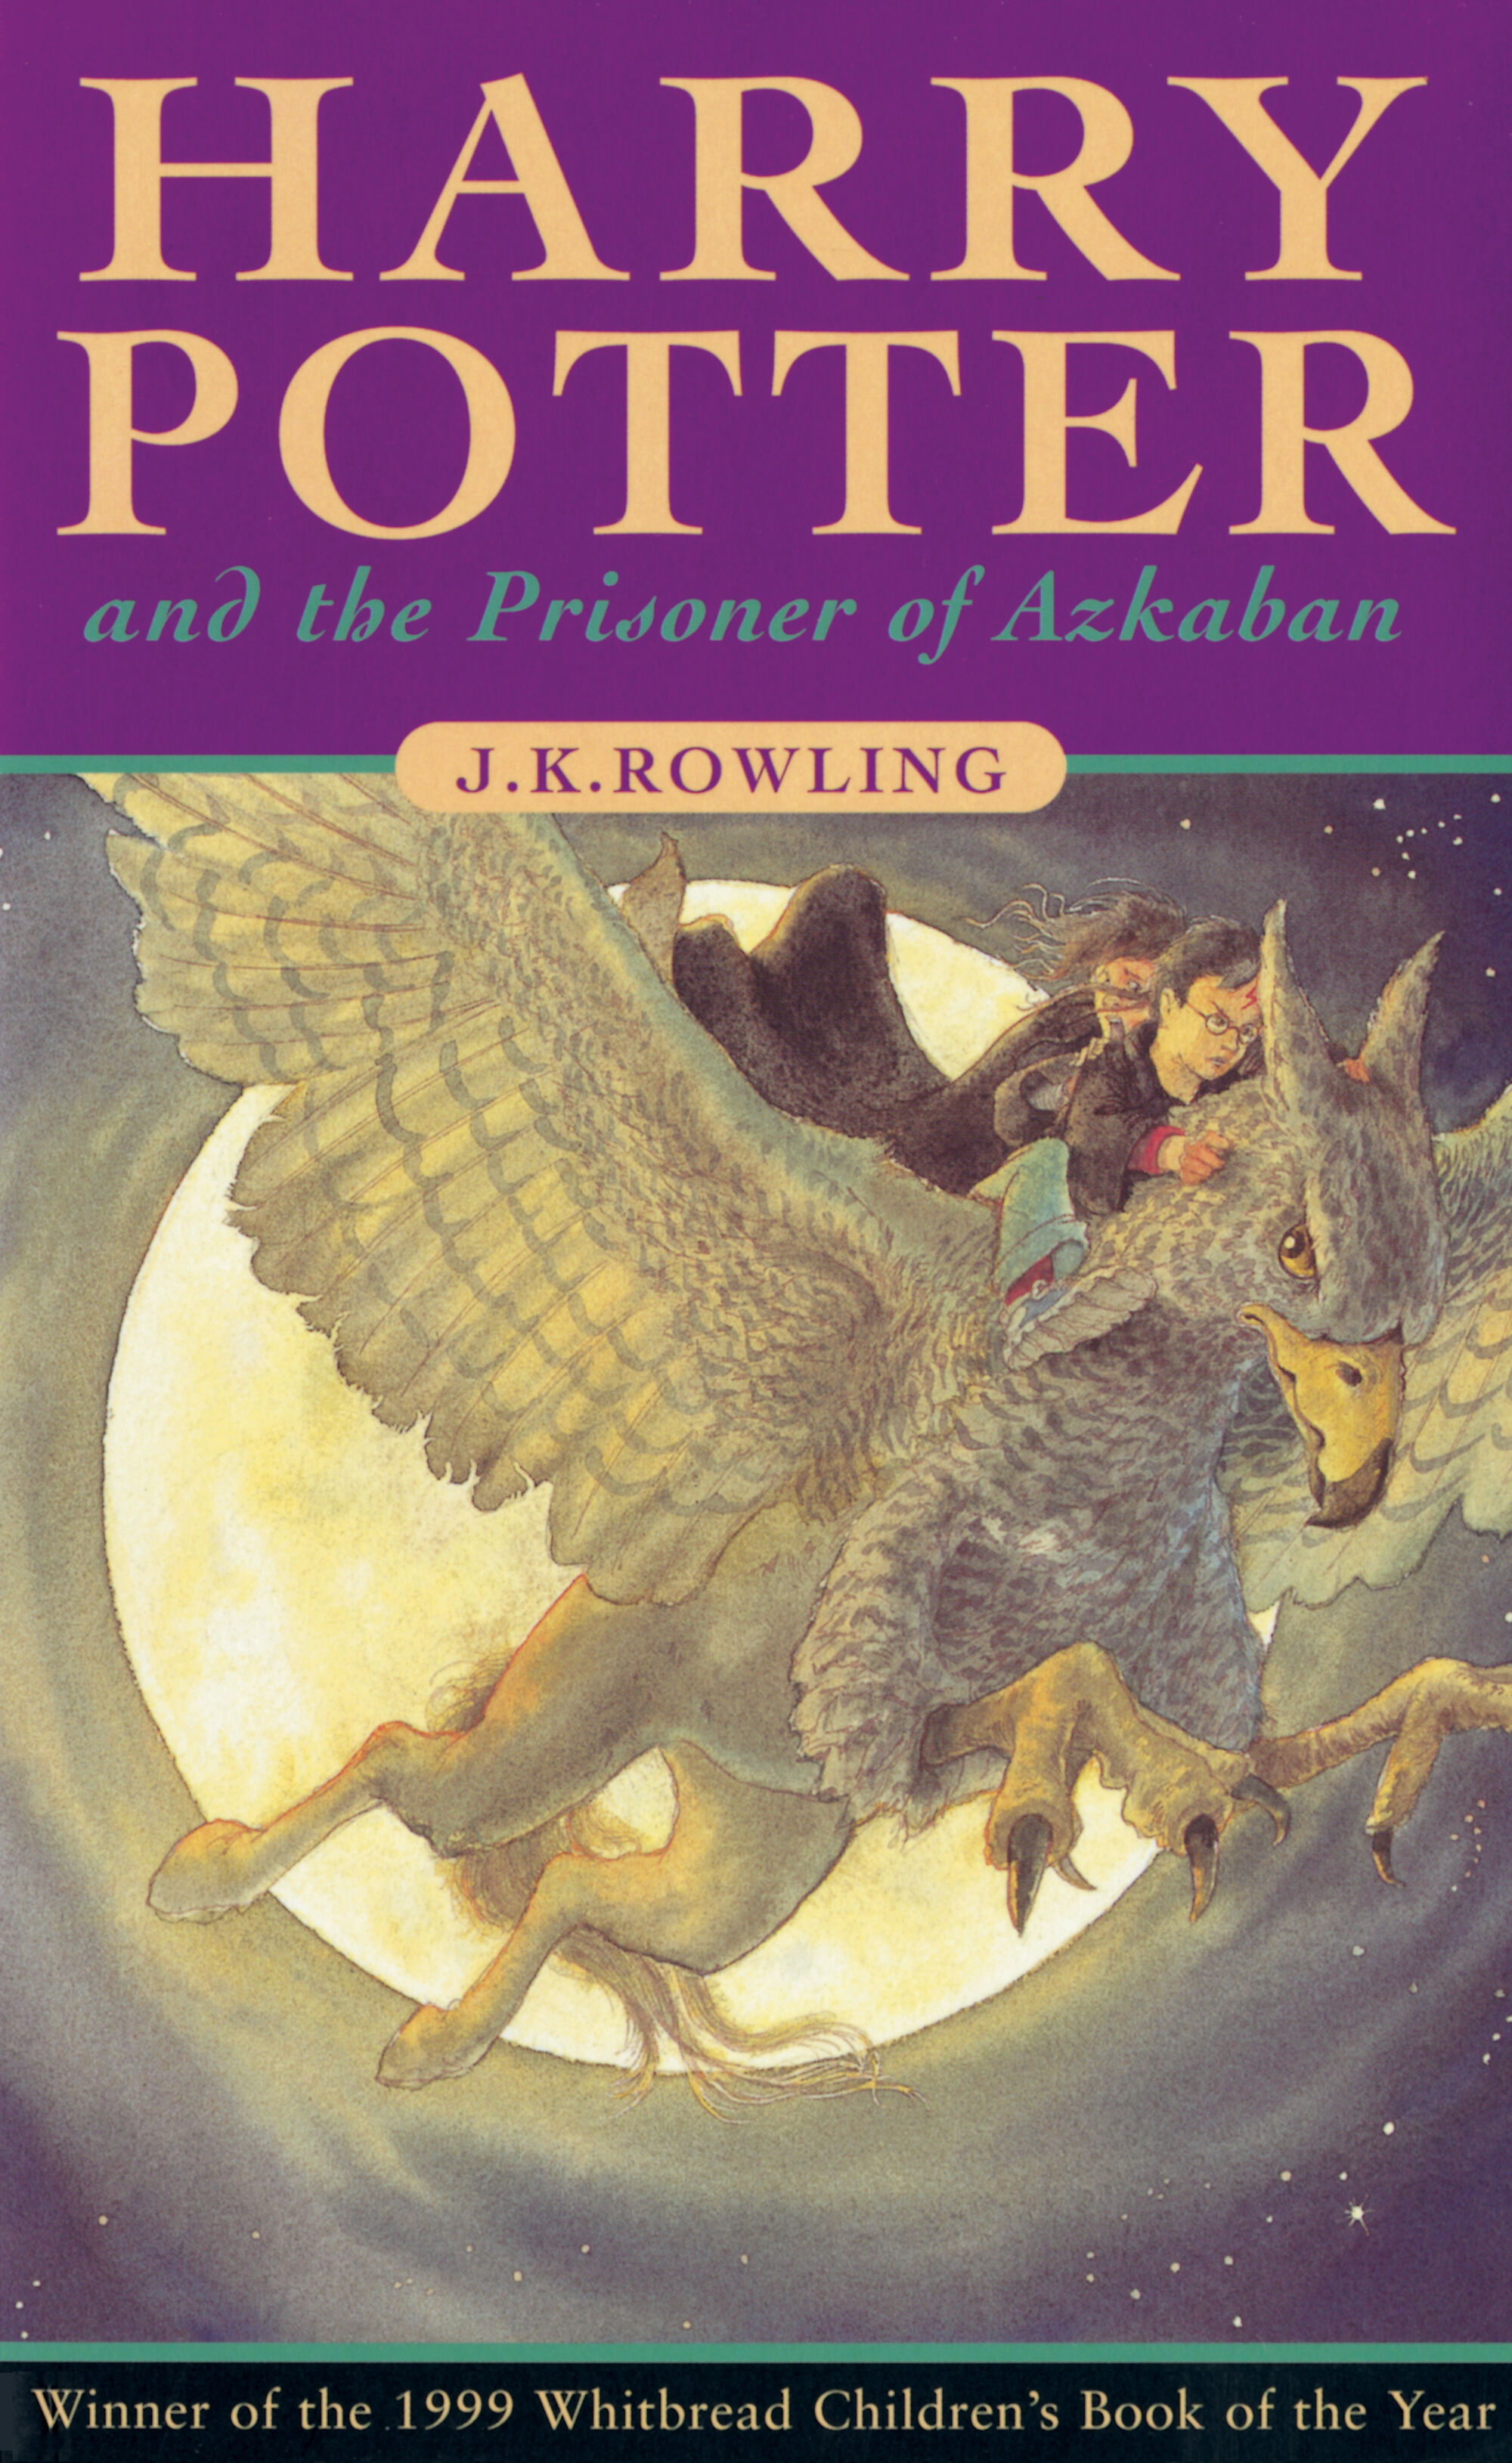 J. K. Rowling: Harry Potter and the Prisoner of Azkaban (Paperback, Bloomsbury)